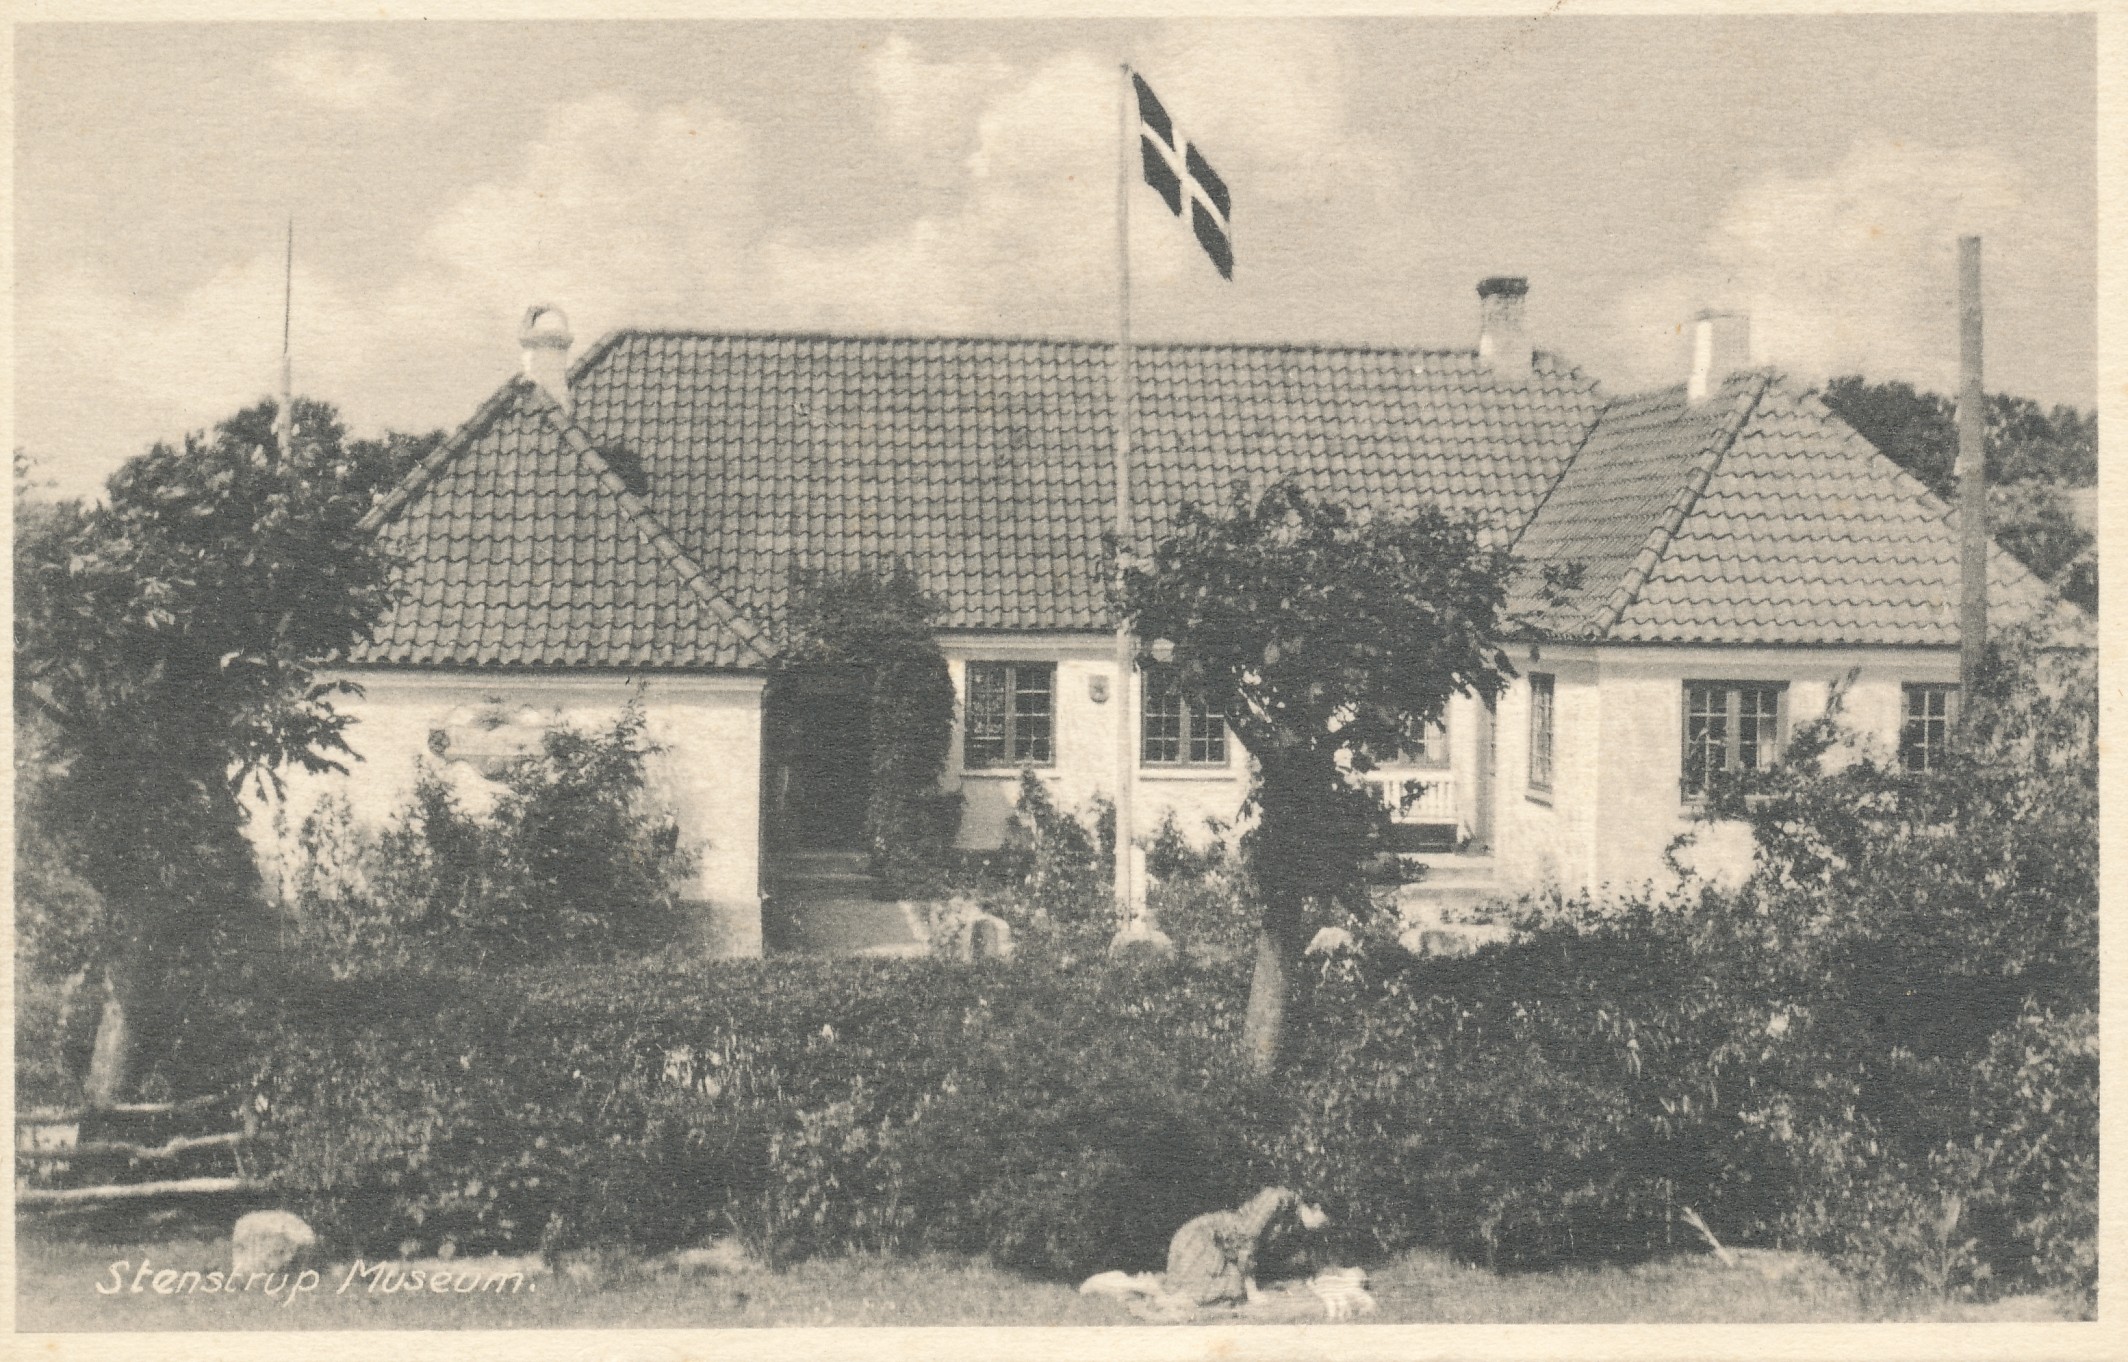 Stenstrup Museum - ca. 1955 (B6830)